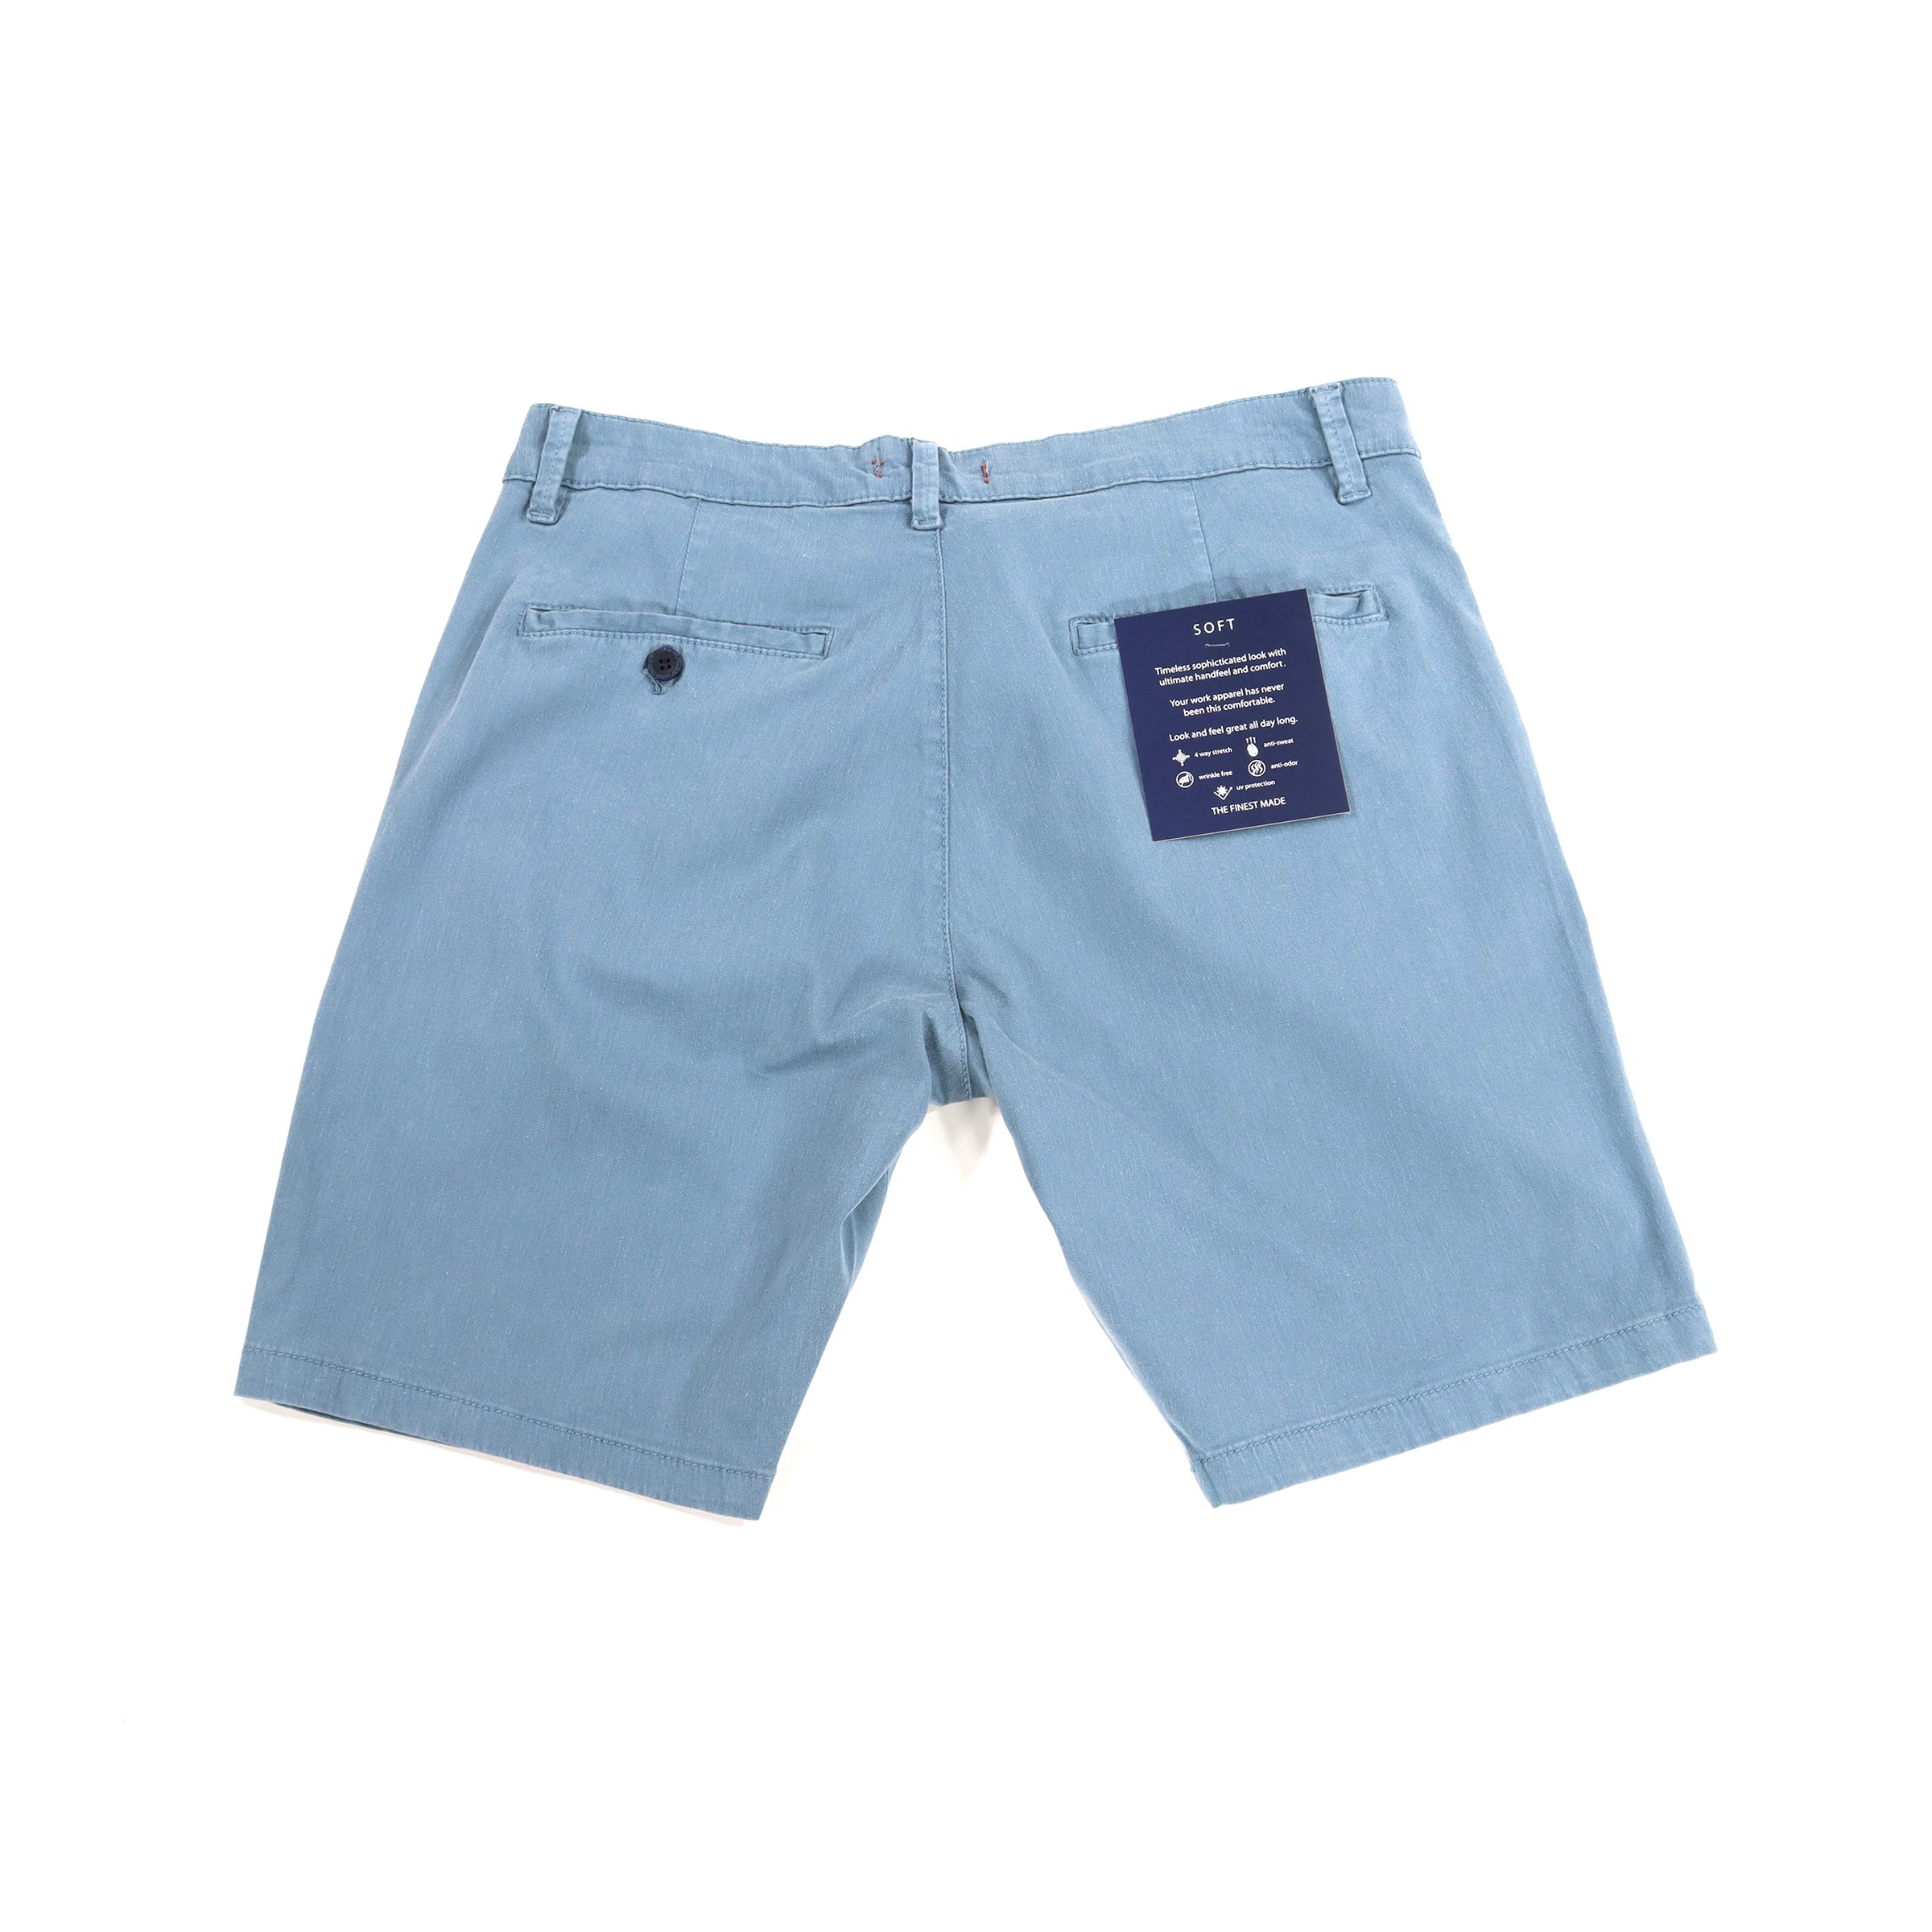 Luchiano Visconti SS23 Steel Blue Tencel Shorts